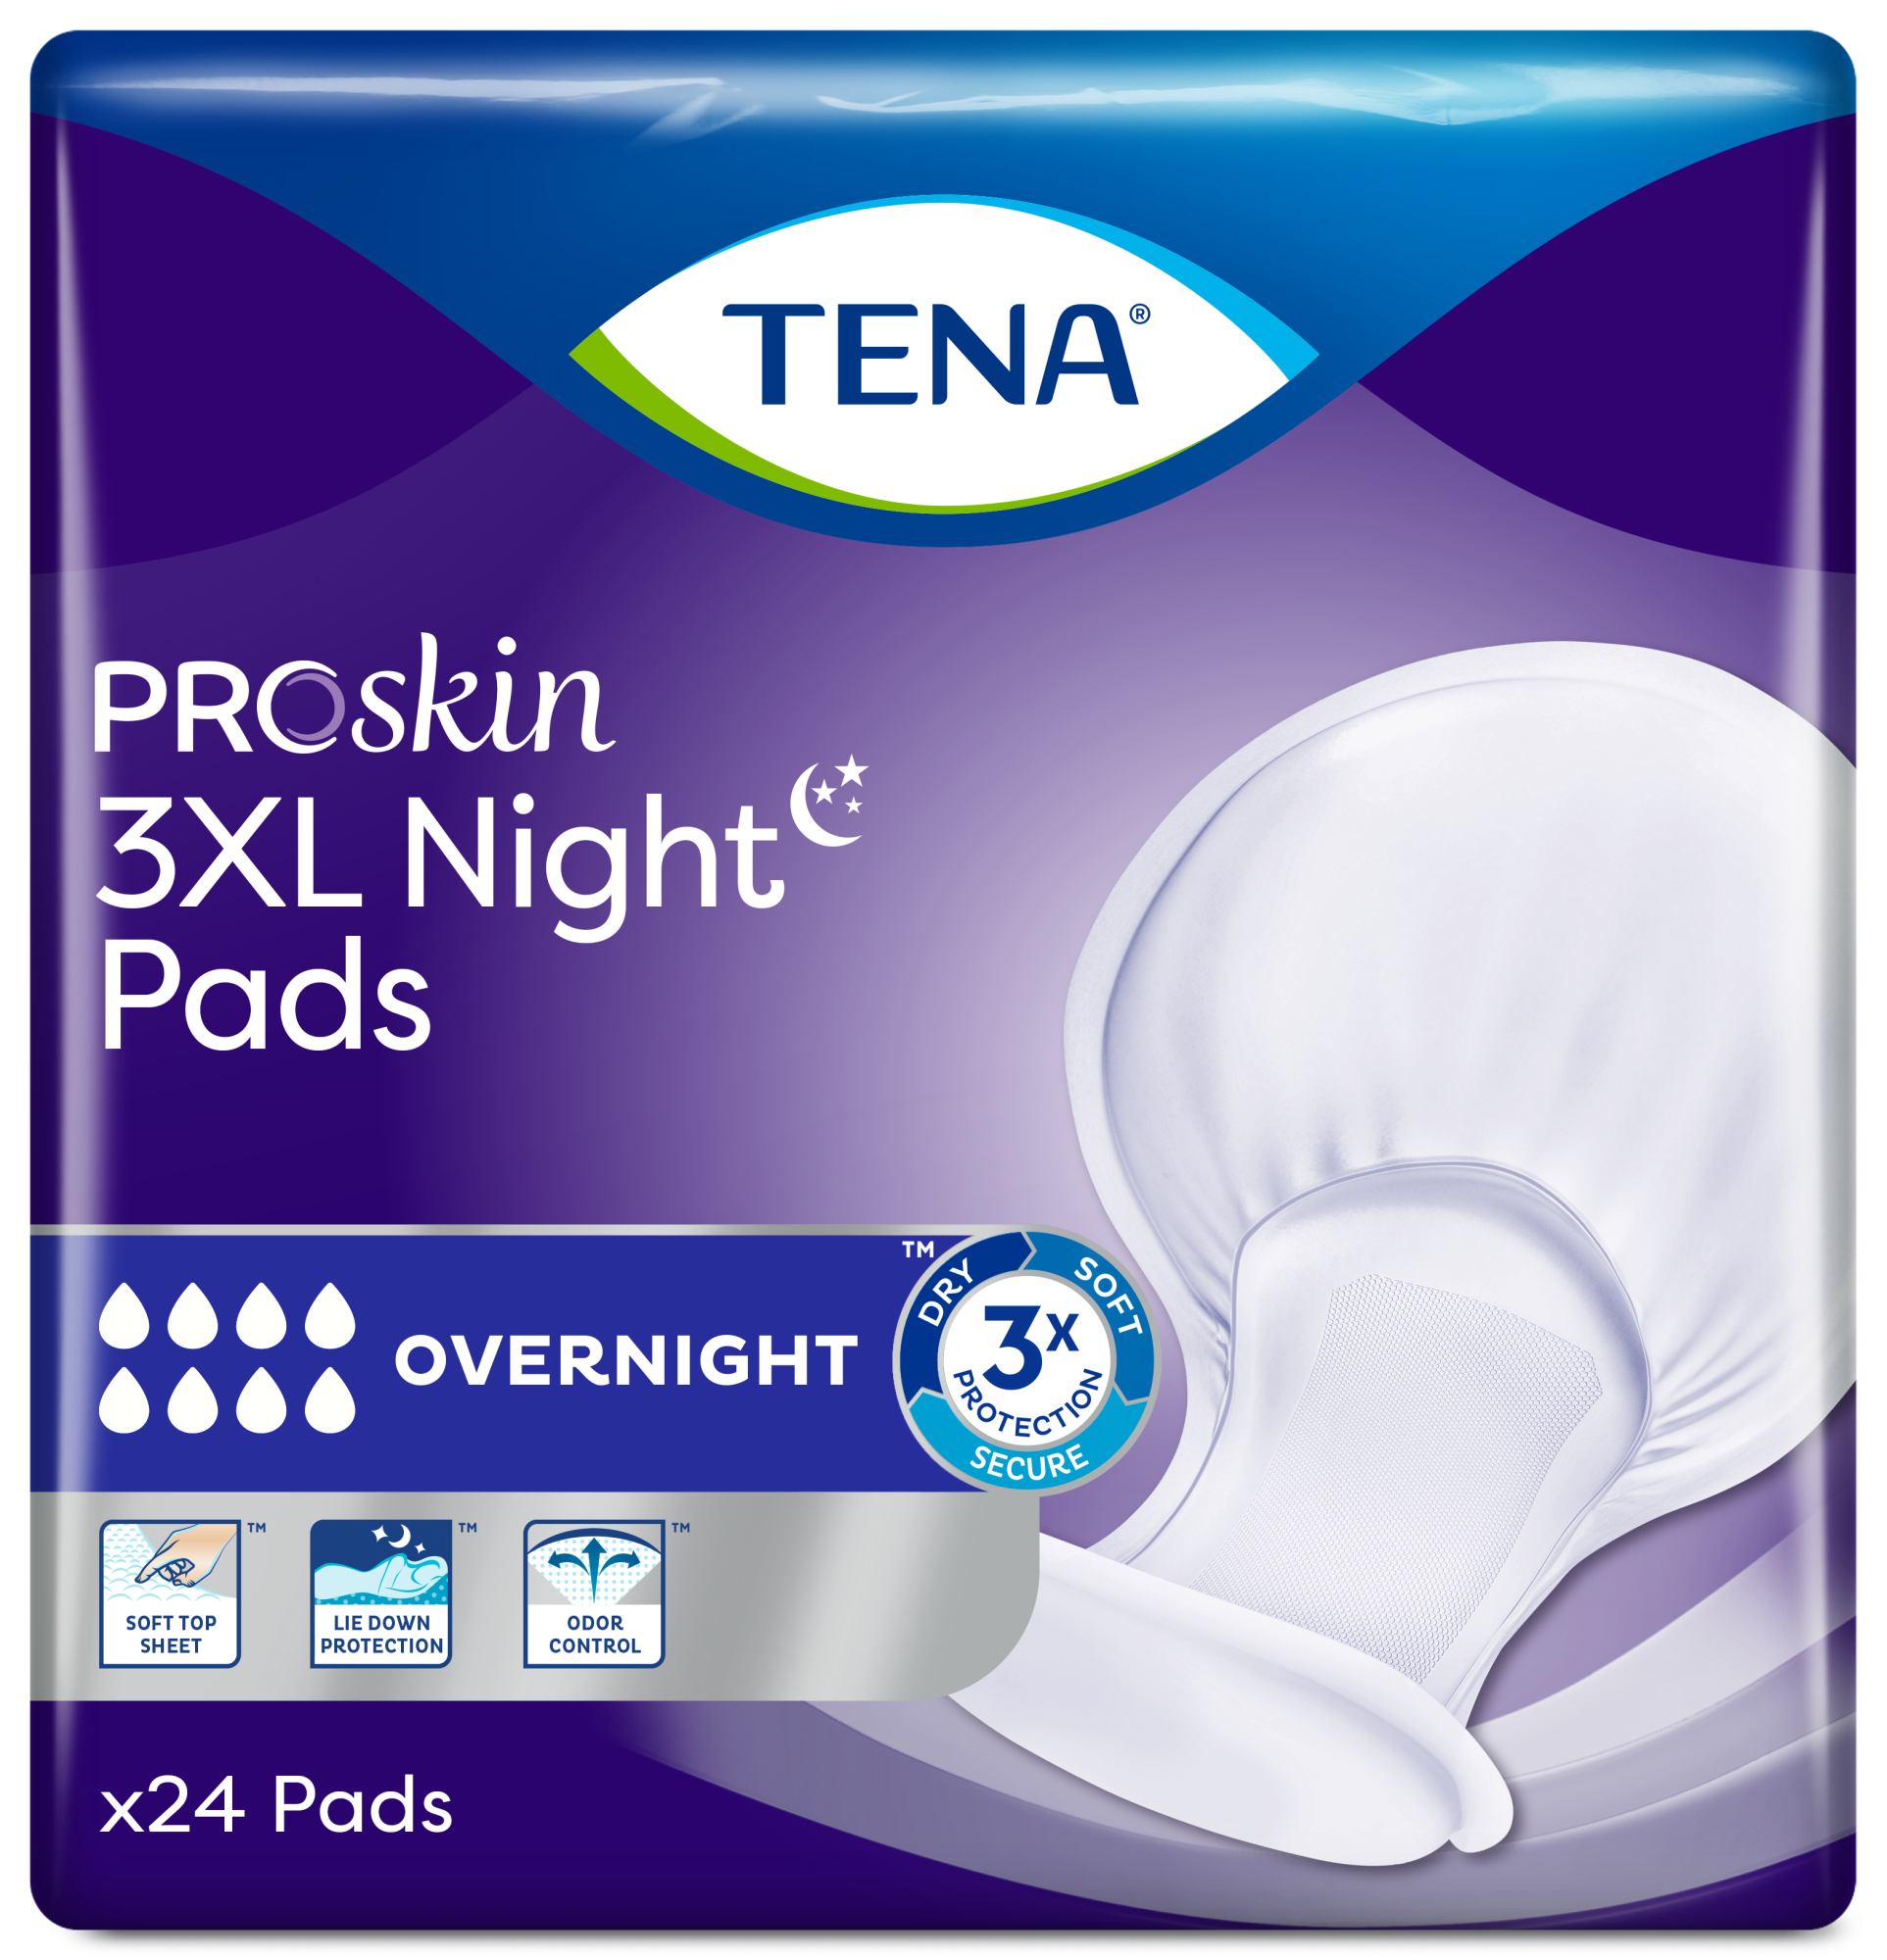 https://tena-images.essity.com/images-c5/92/379092/optimized-AzurePNG2K/tena-proskin-3xl-night-pads-beauty.png